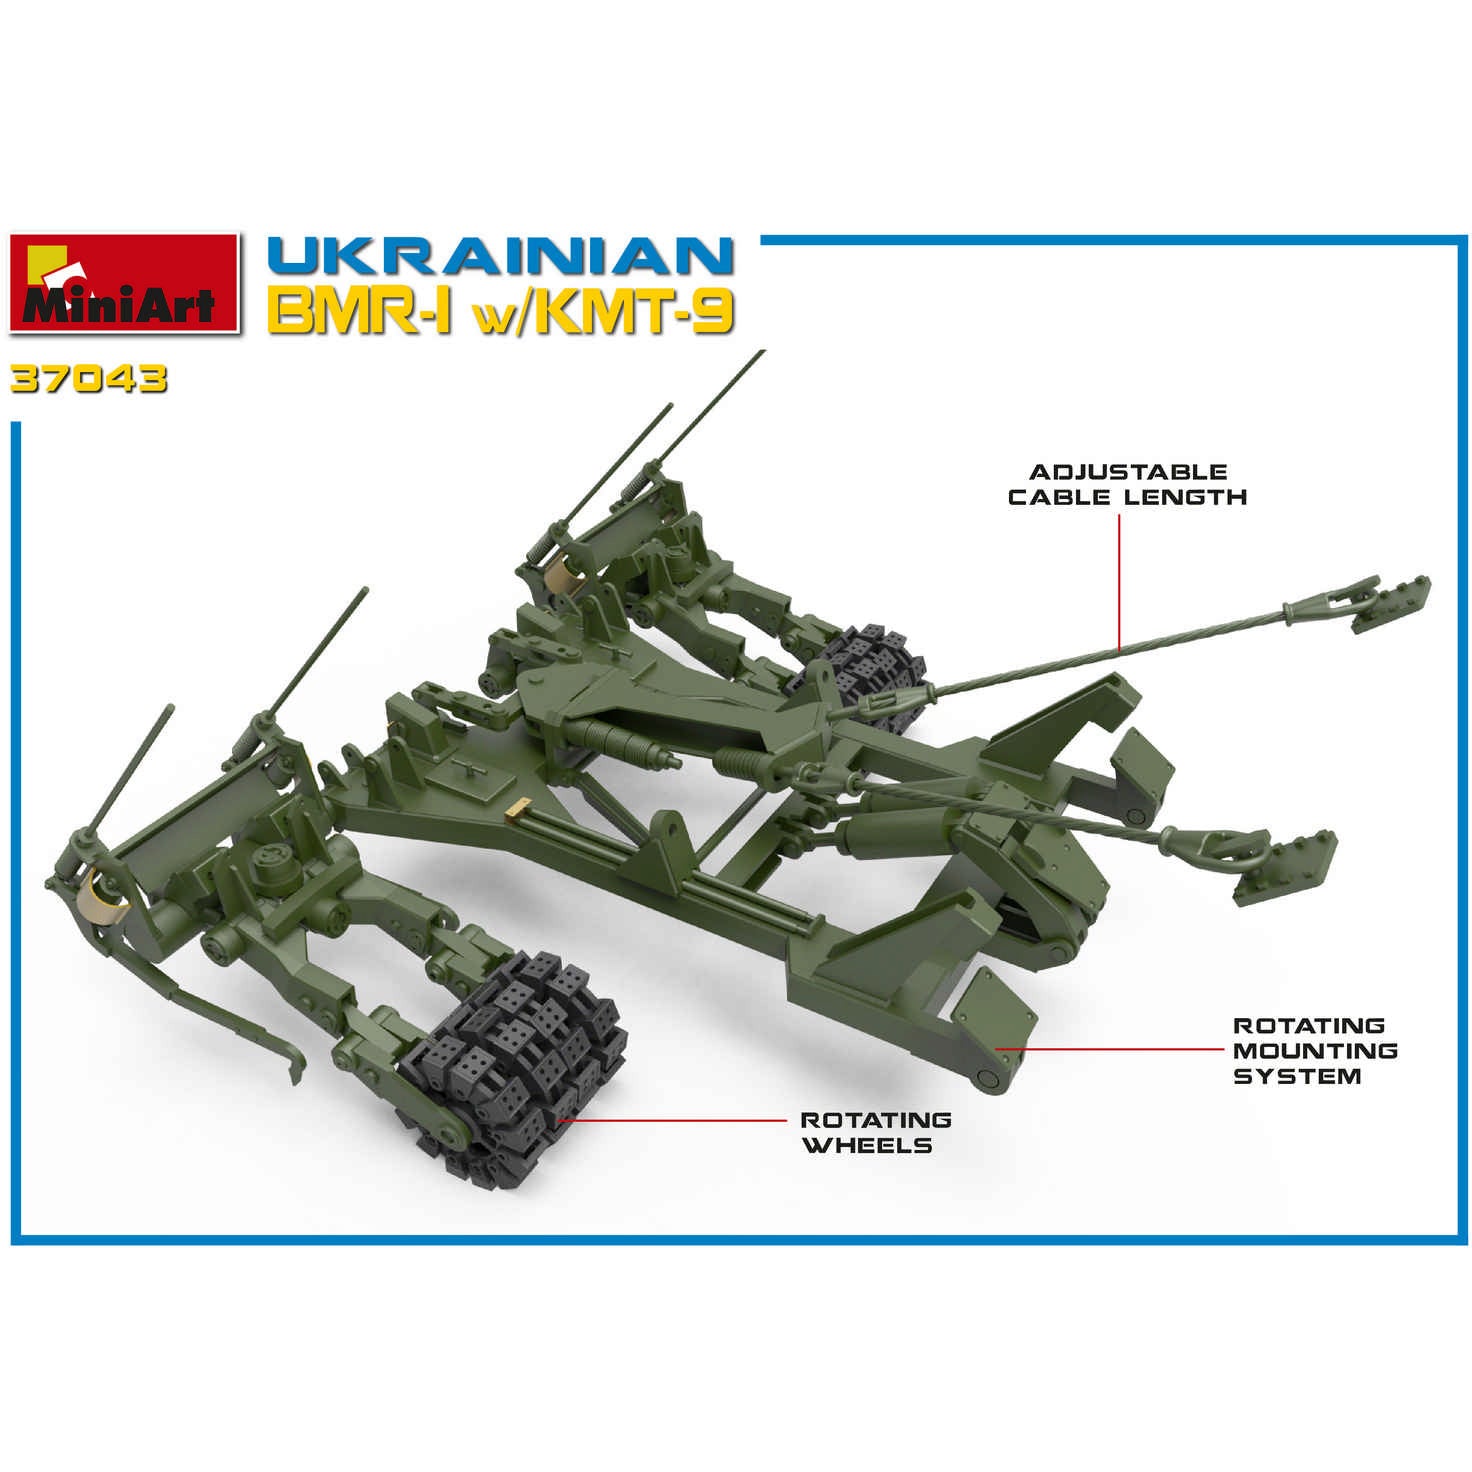 MINIART 1/35 Ukrainian BMR-1 with KMT-9